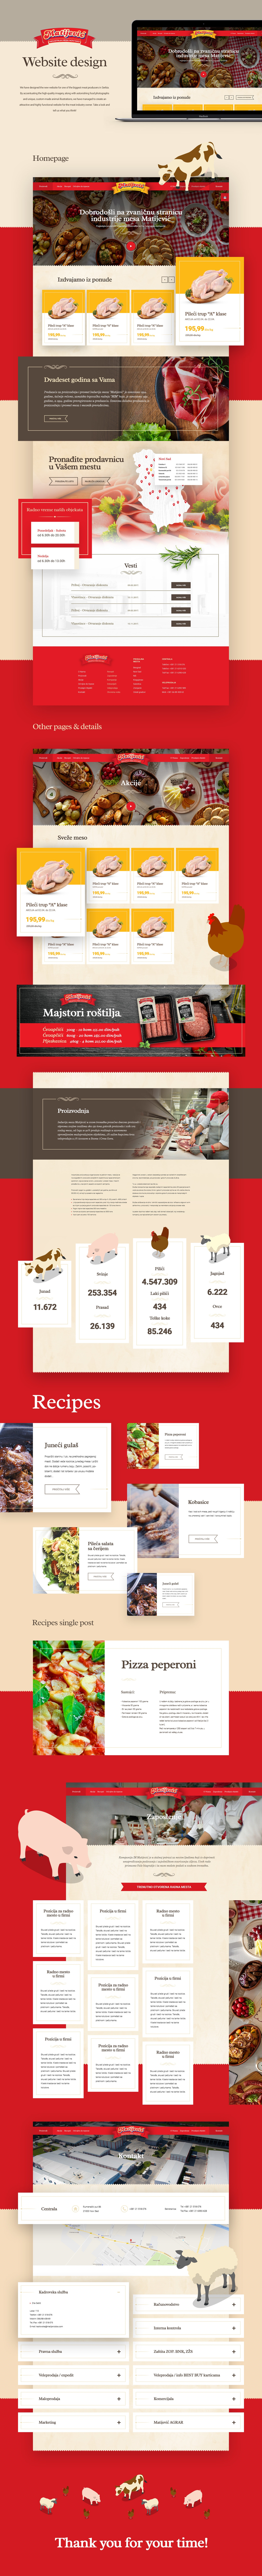 matijevic meat industry website design